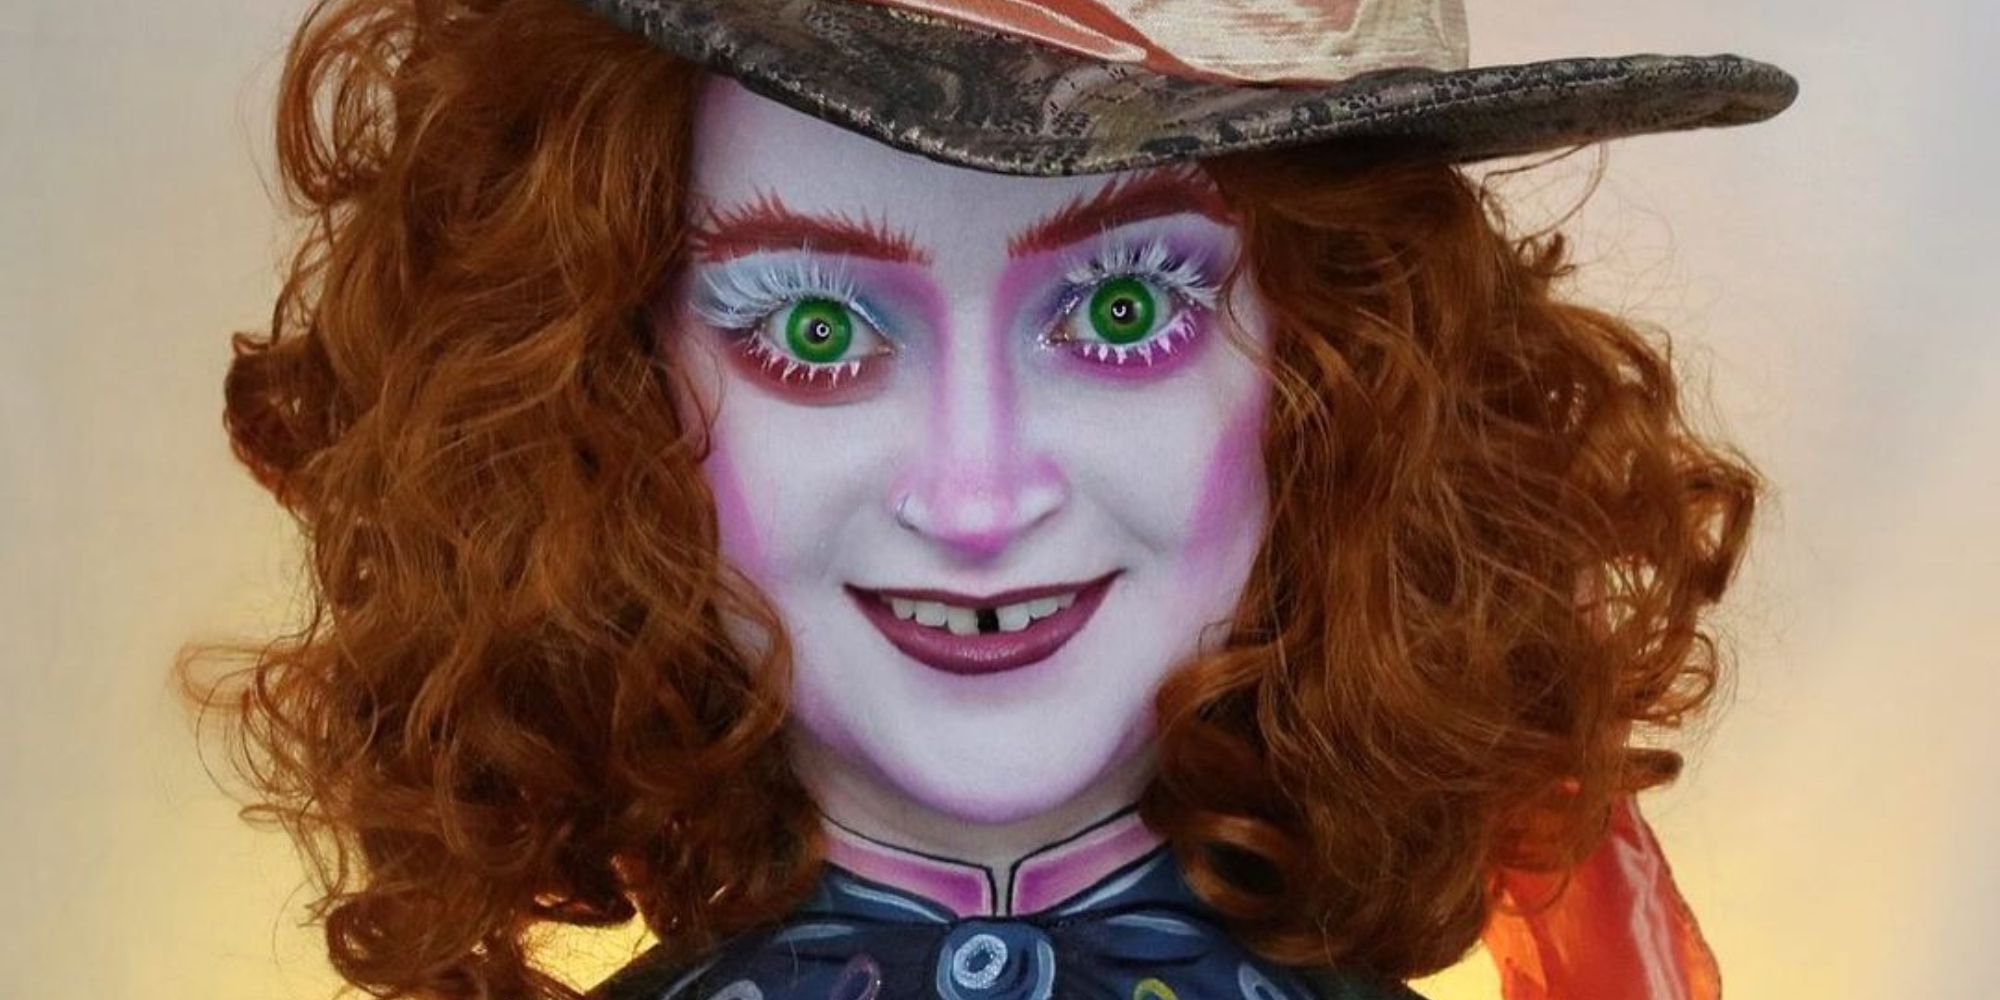 Lauren Ward cosplaying as Mad Hatter in Alice in Wonderland